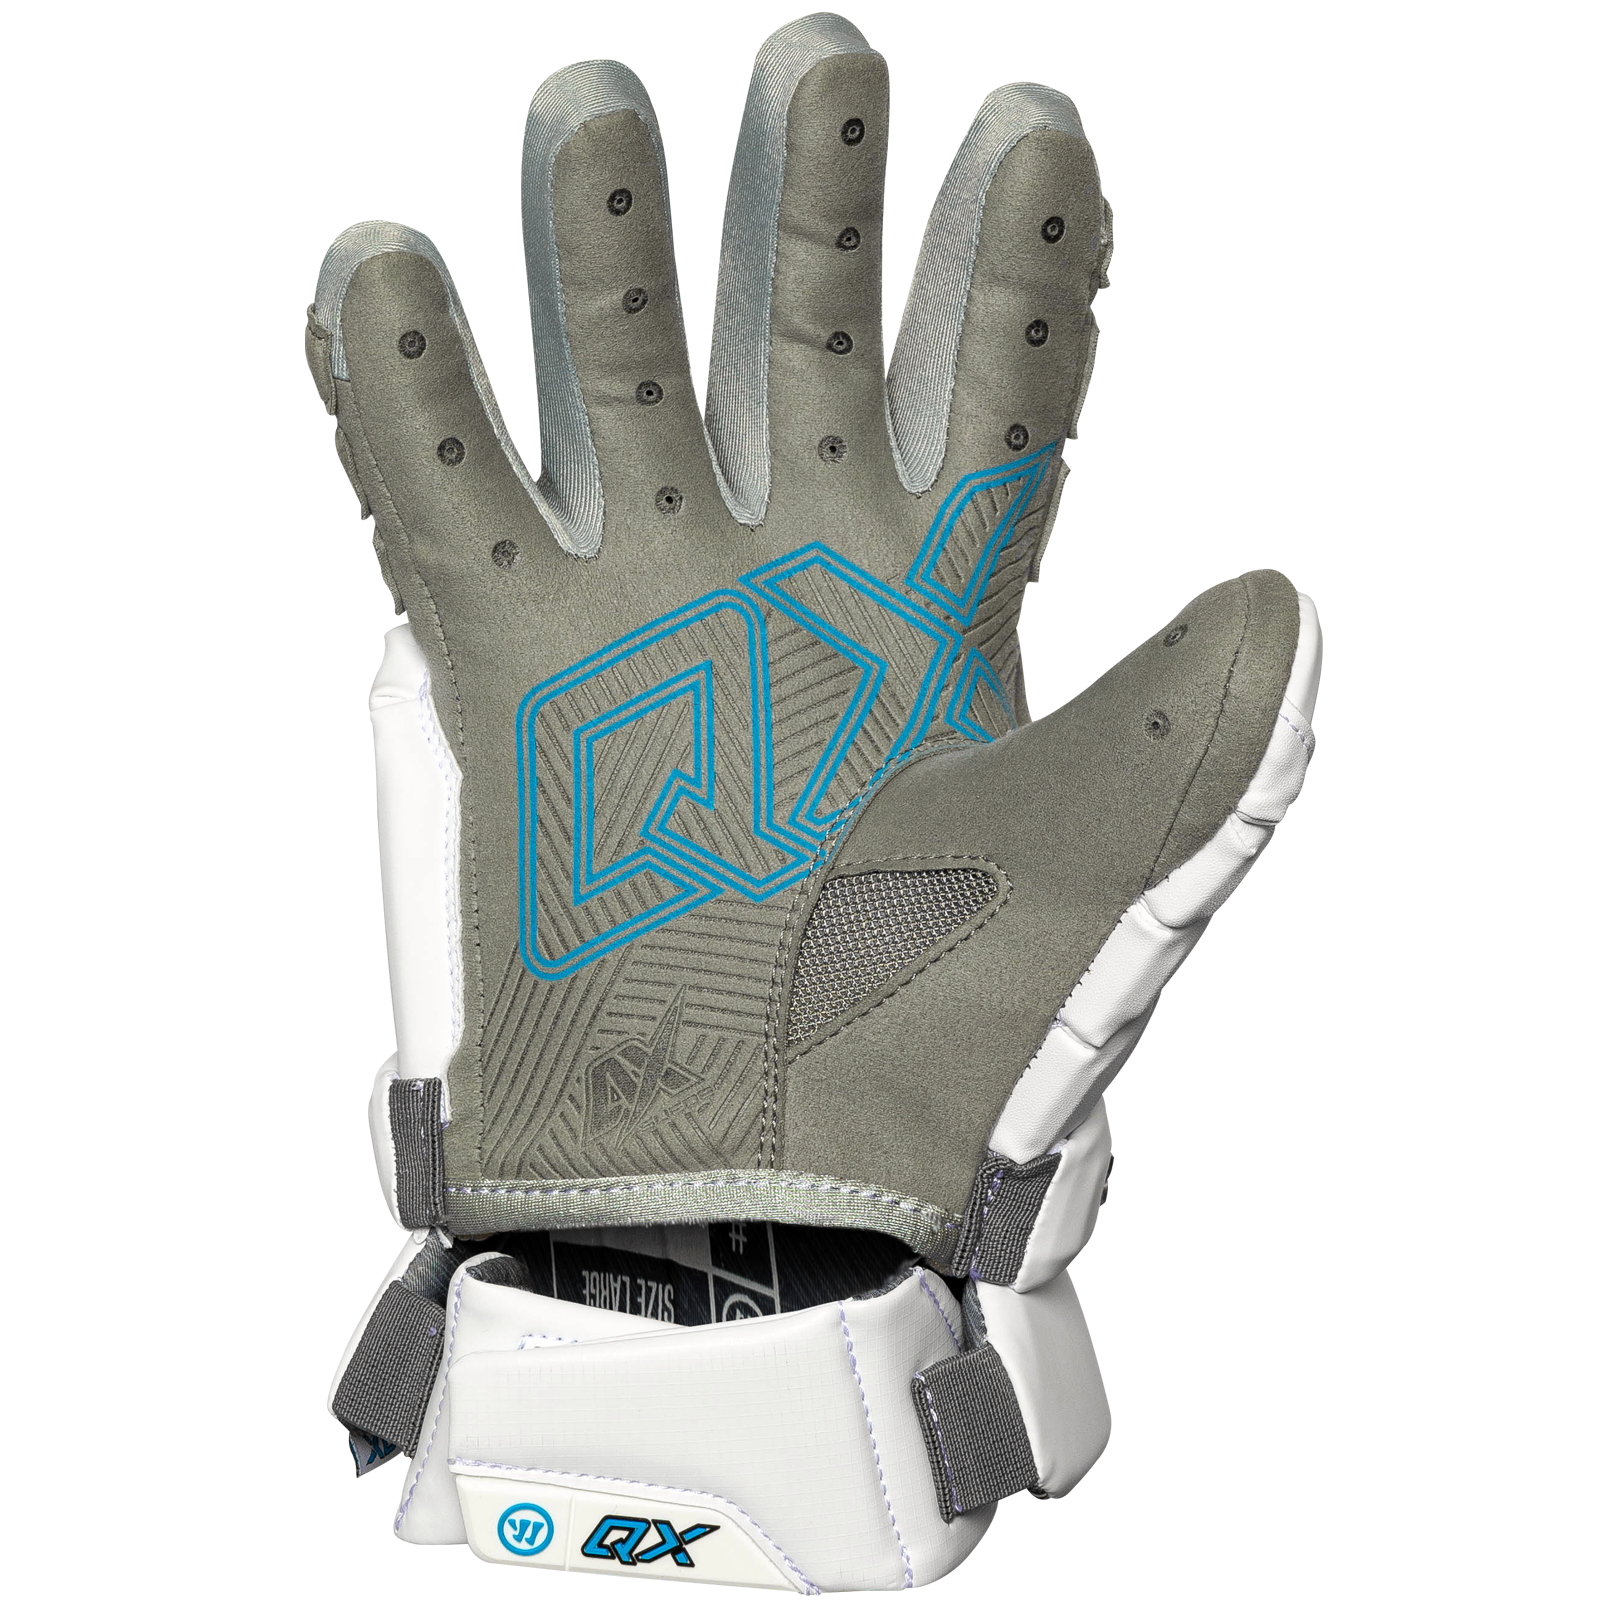 Warrior EVO QX Lacrosse Gloves